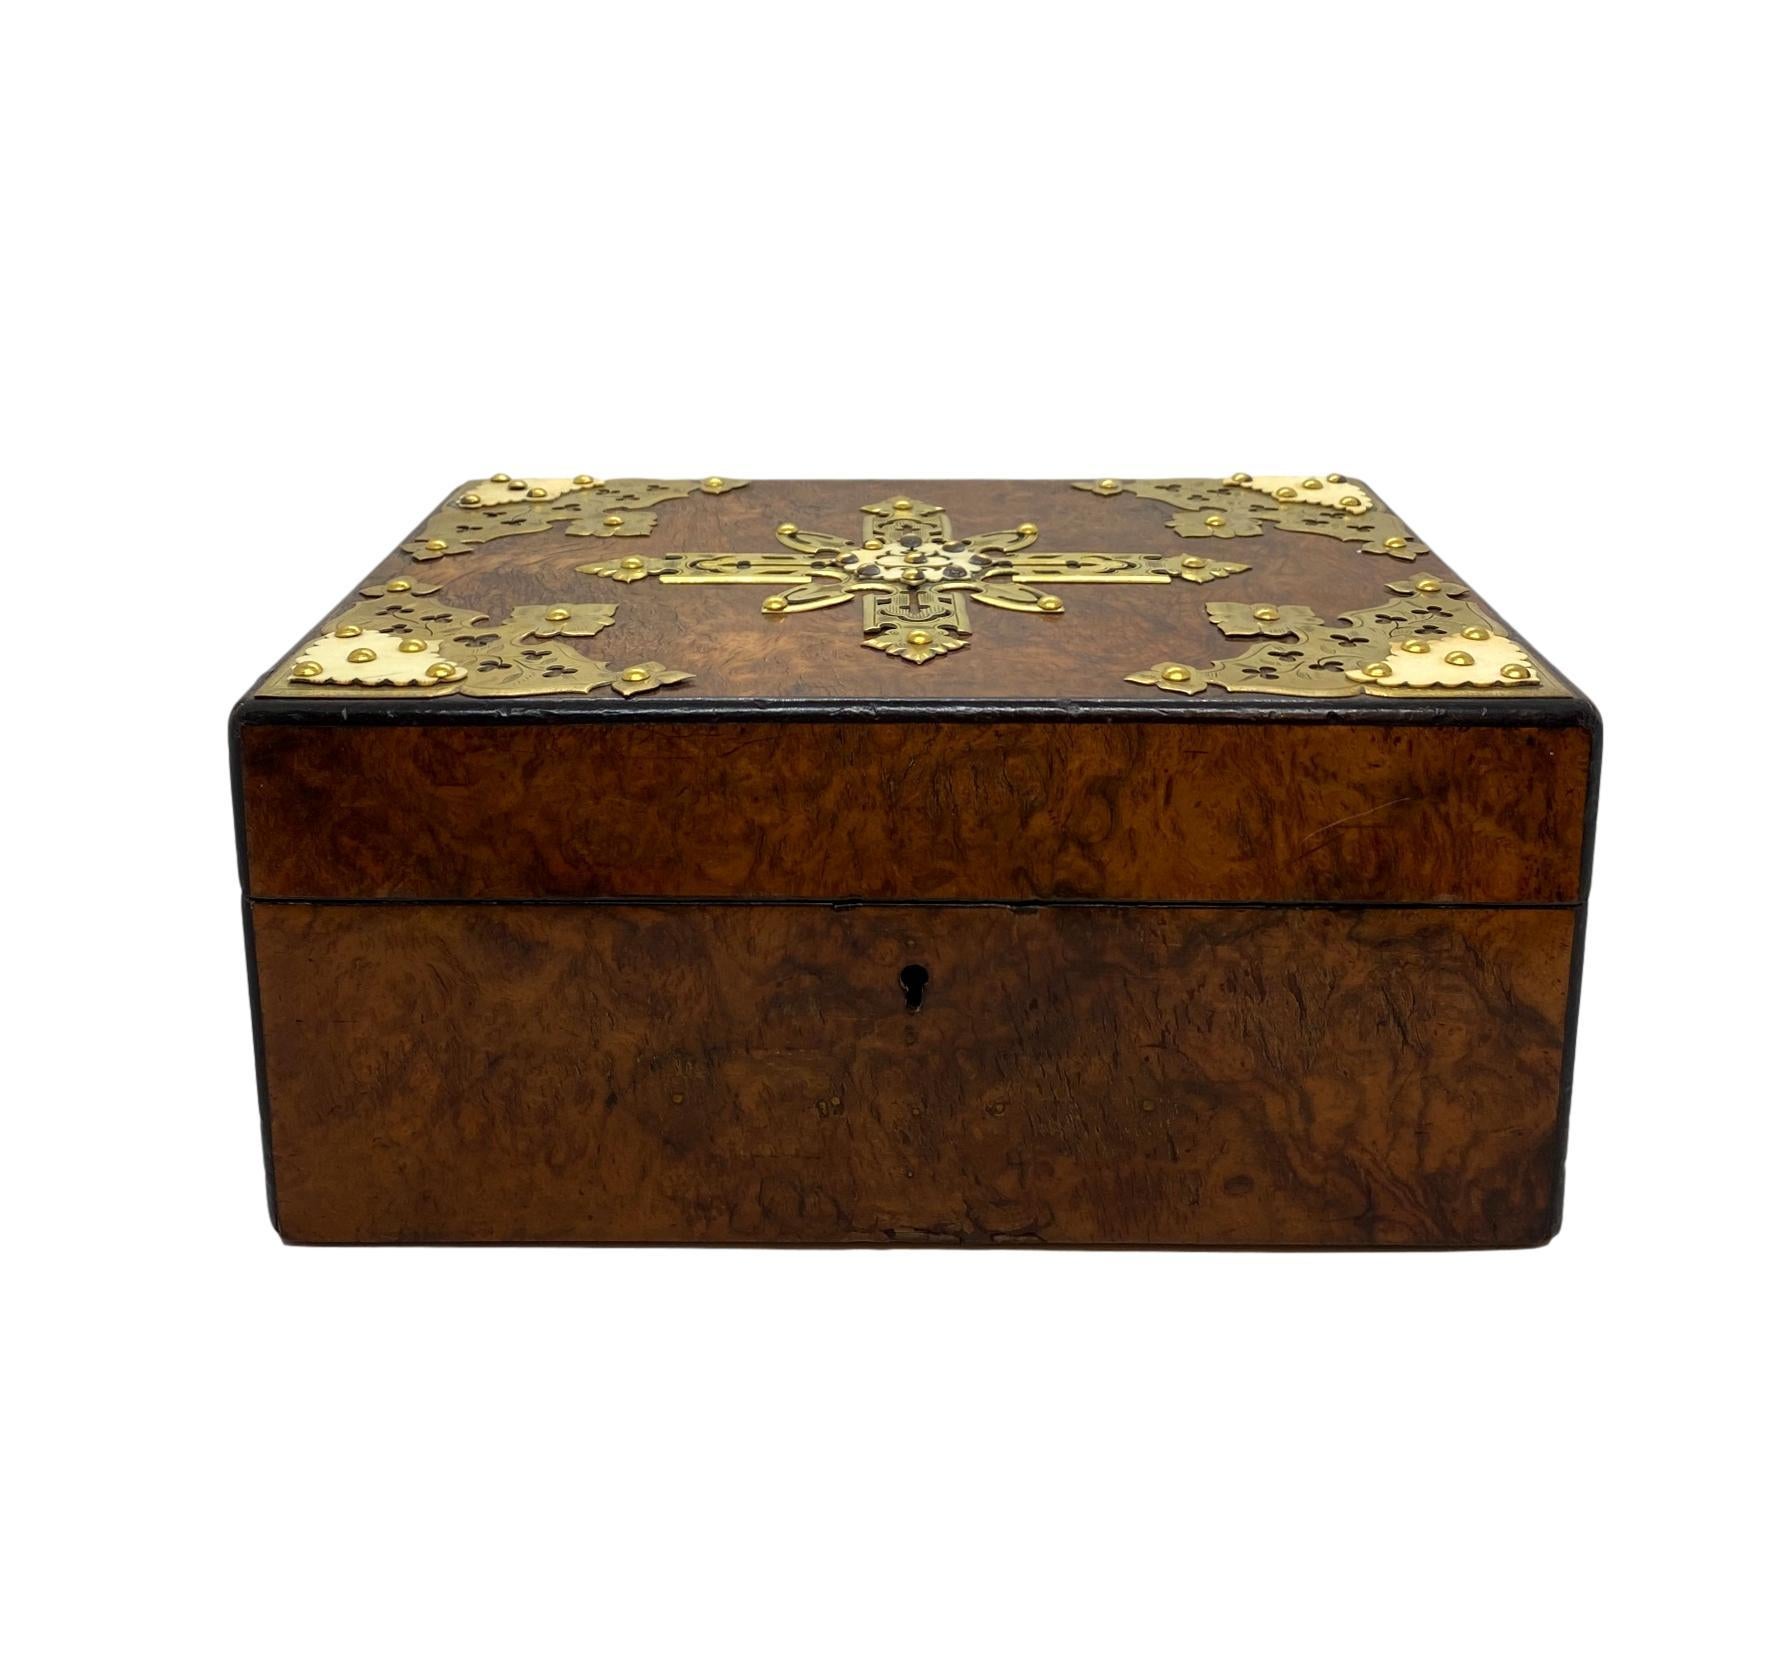 Burl walnut Ciar box humidor with intricate brass tracery, English, circa 1880.

Dimensions: D 7.75”, W 10.75”, H 4.75”.